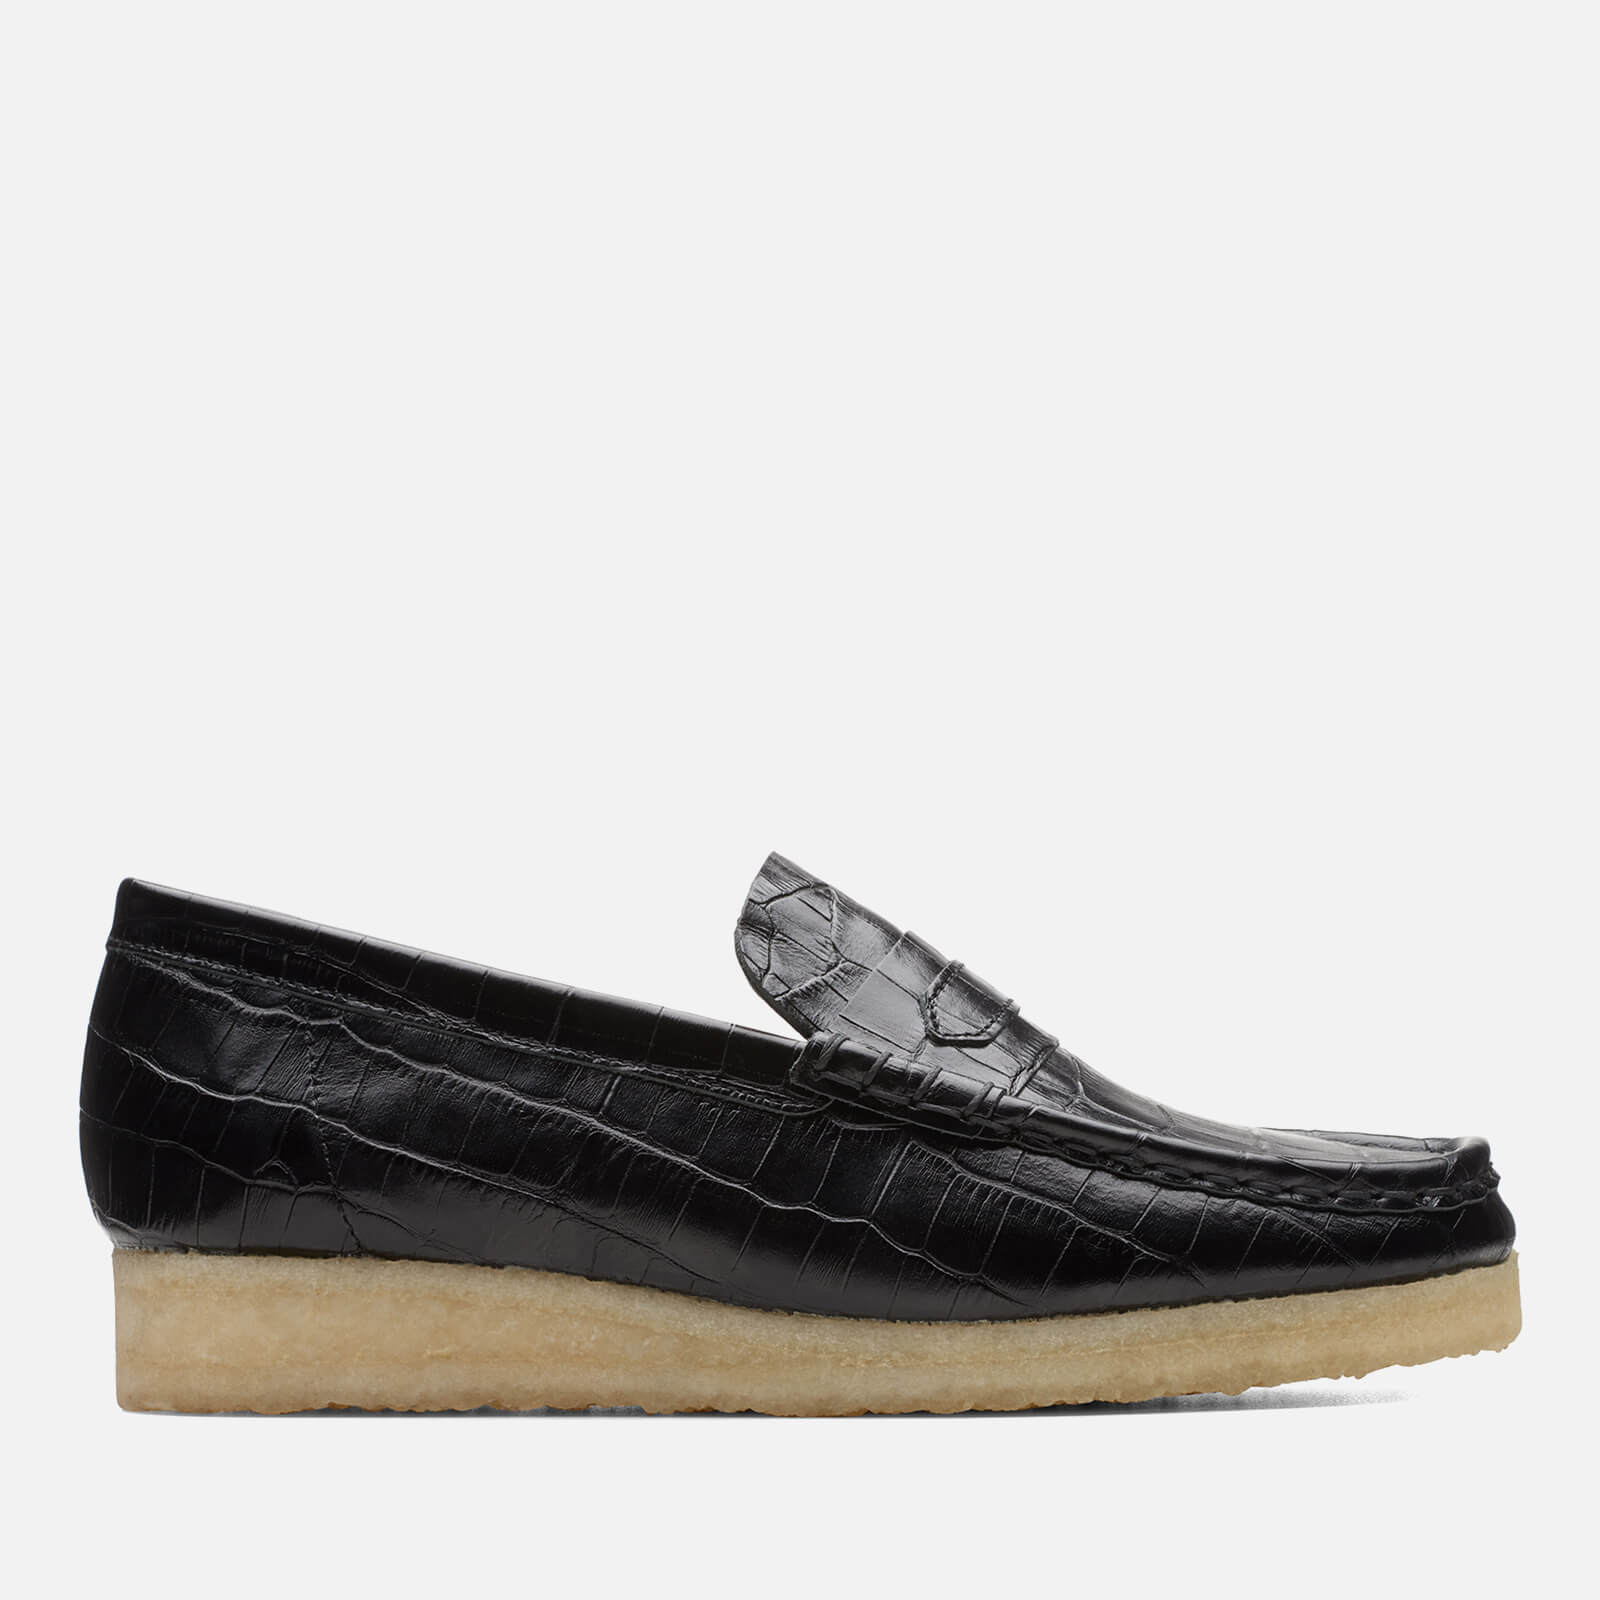 clarks originals women's wallabee leather loafers - uk 4